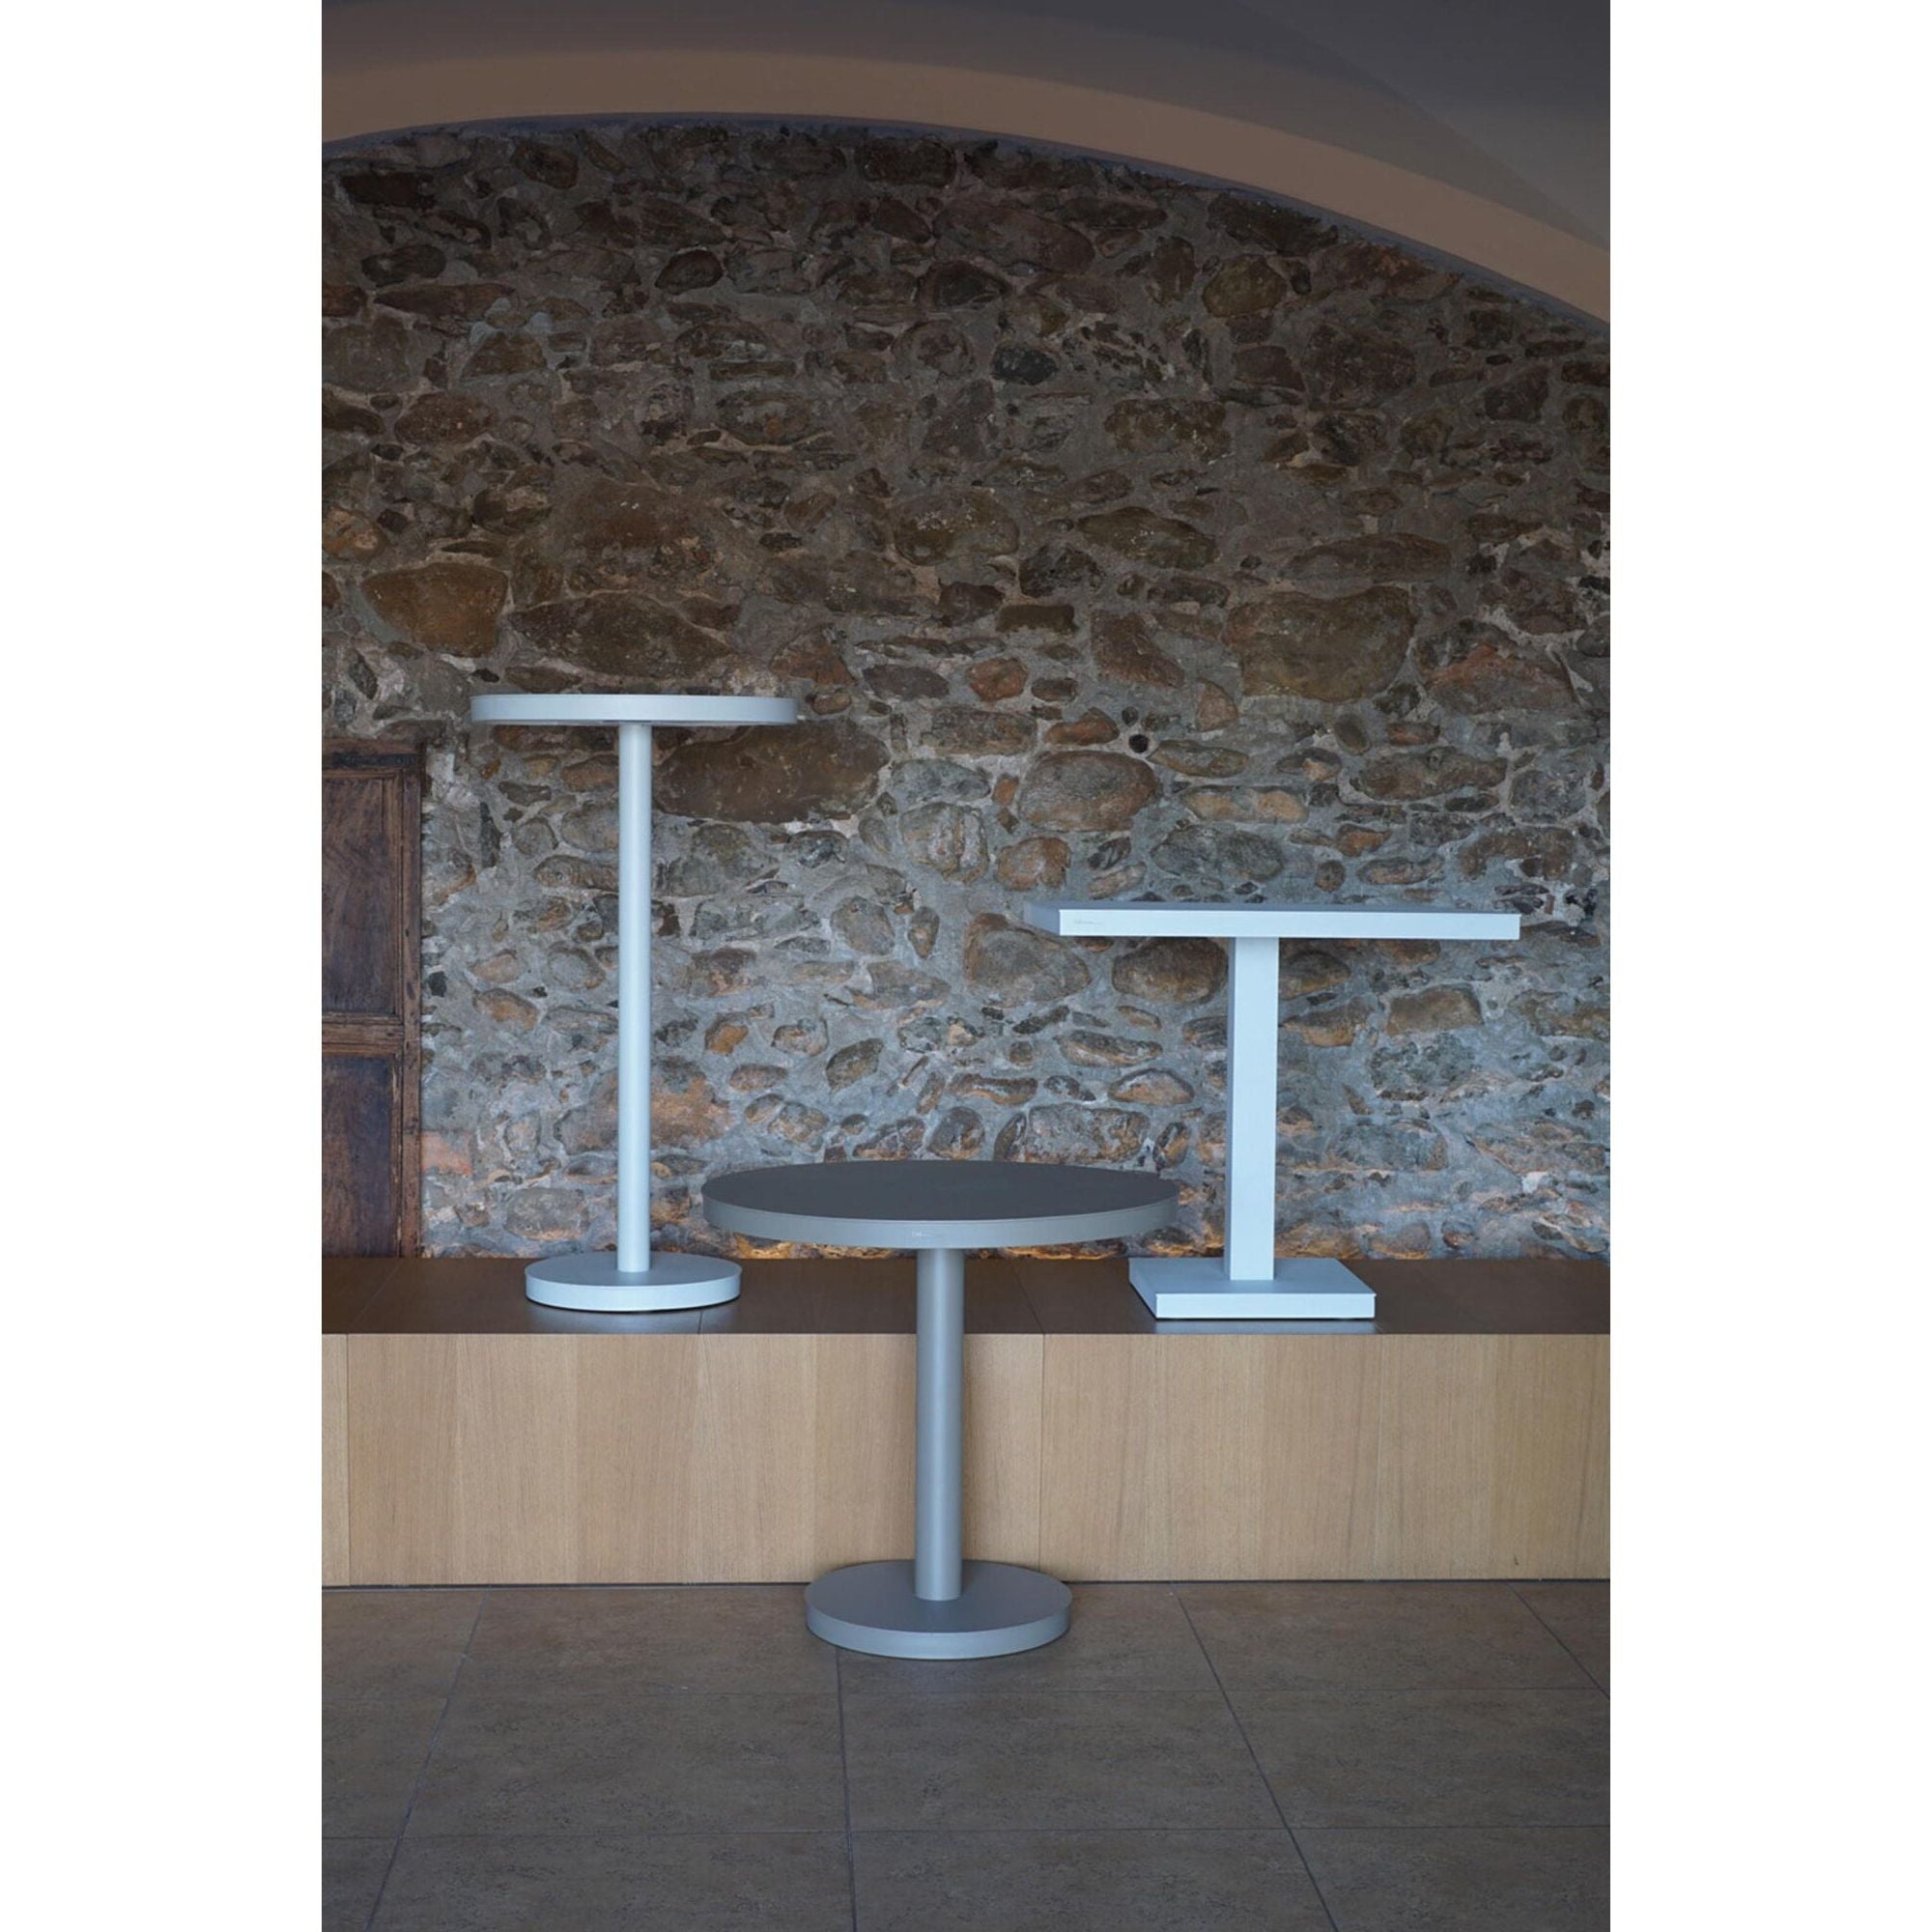 Resol barcino round table indoors, outdoor Ø60 black